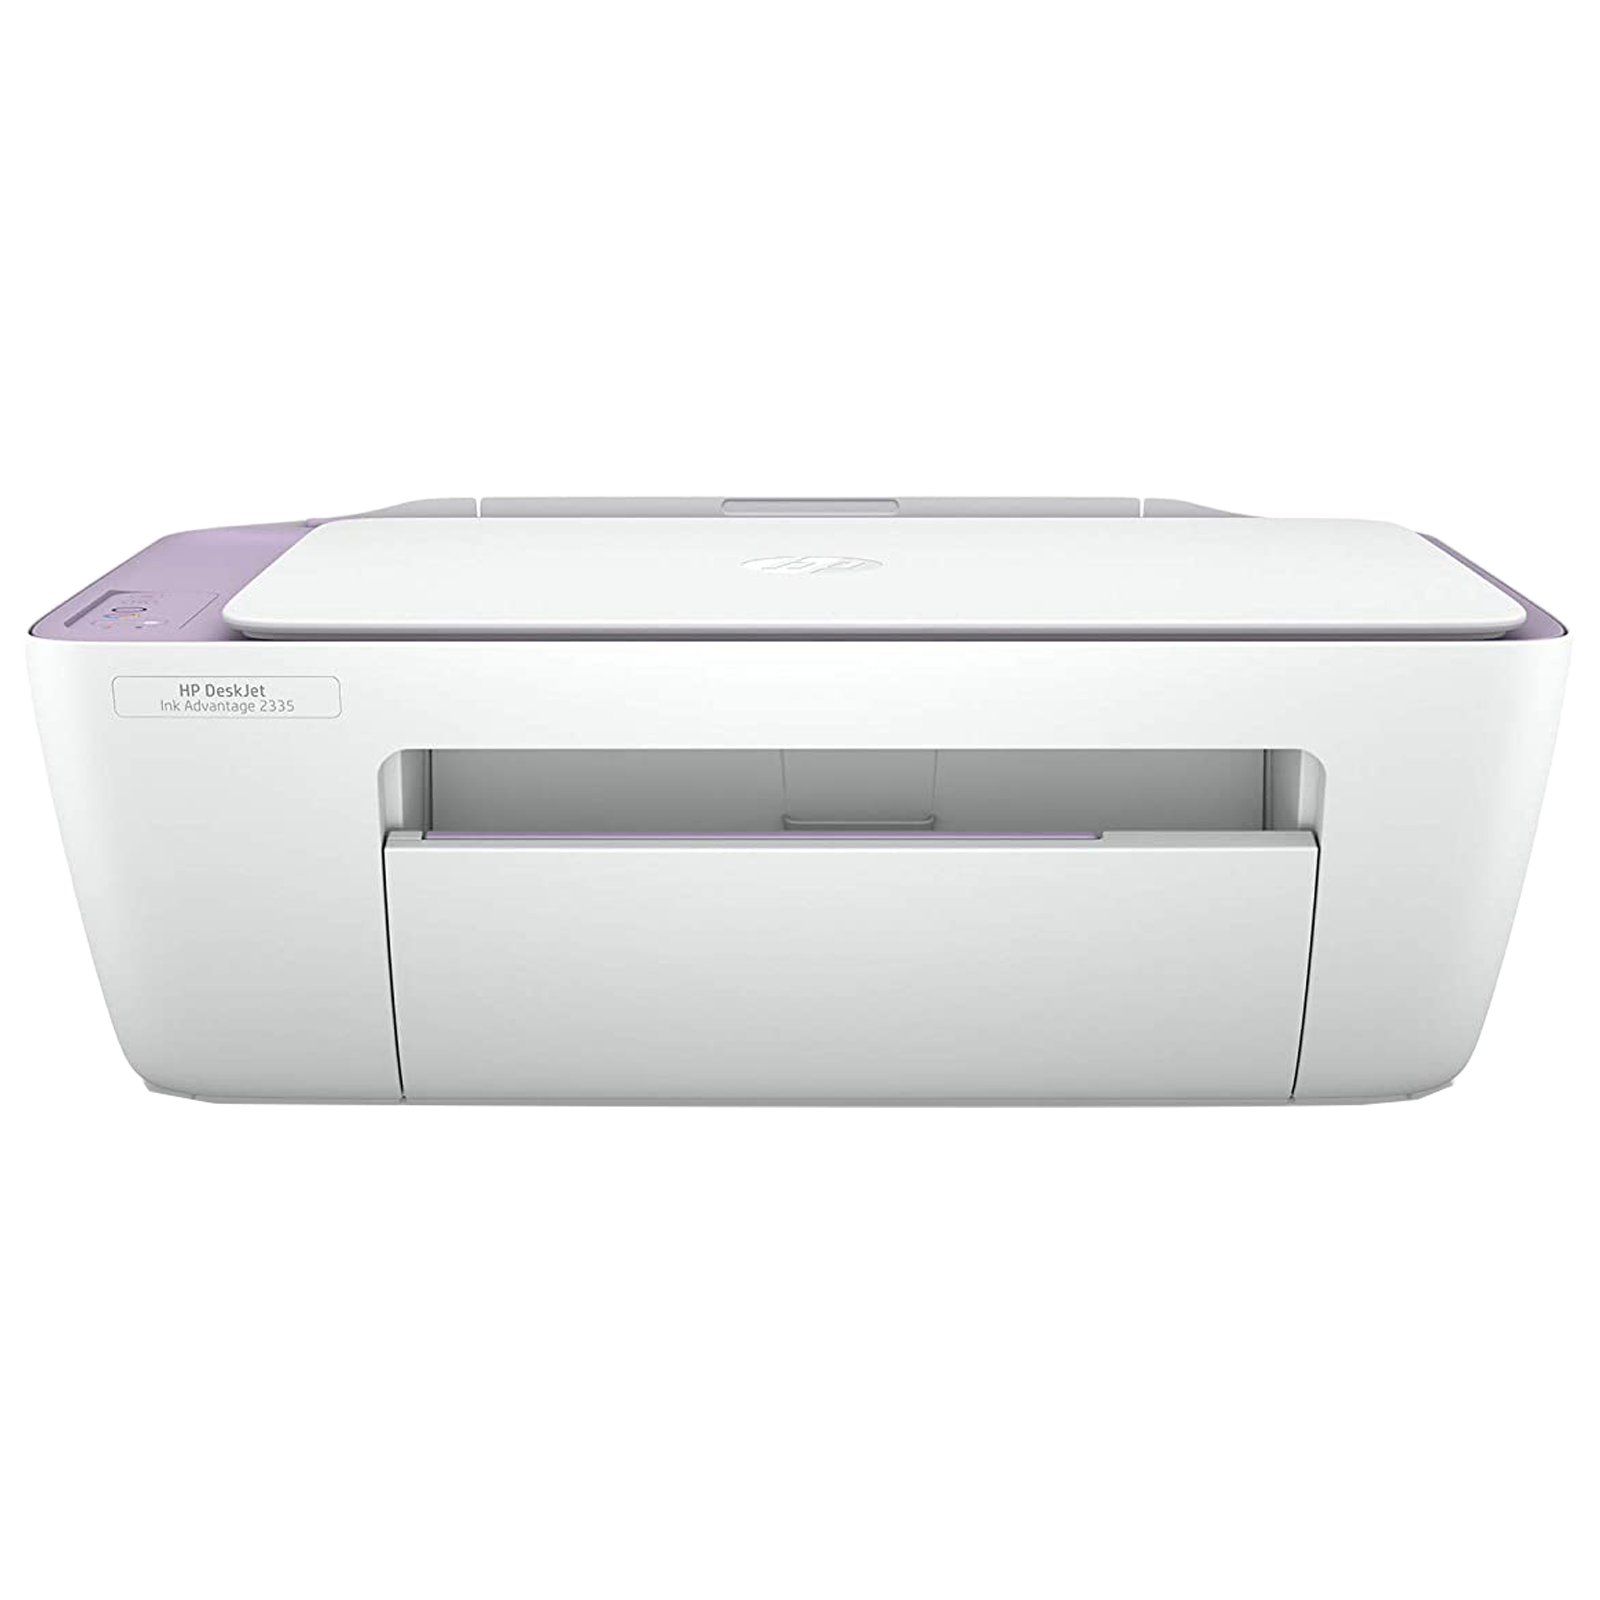 HP DeskJet 2335 USB Color All-in-One Inkjet Printer (Auto-Off Technology, 7WQ08B, White)